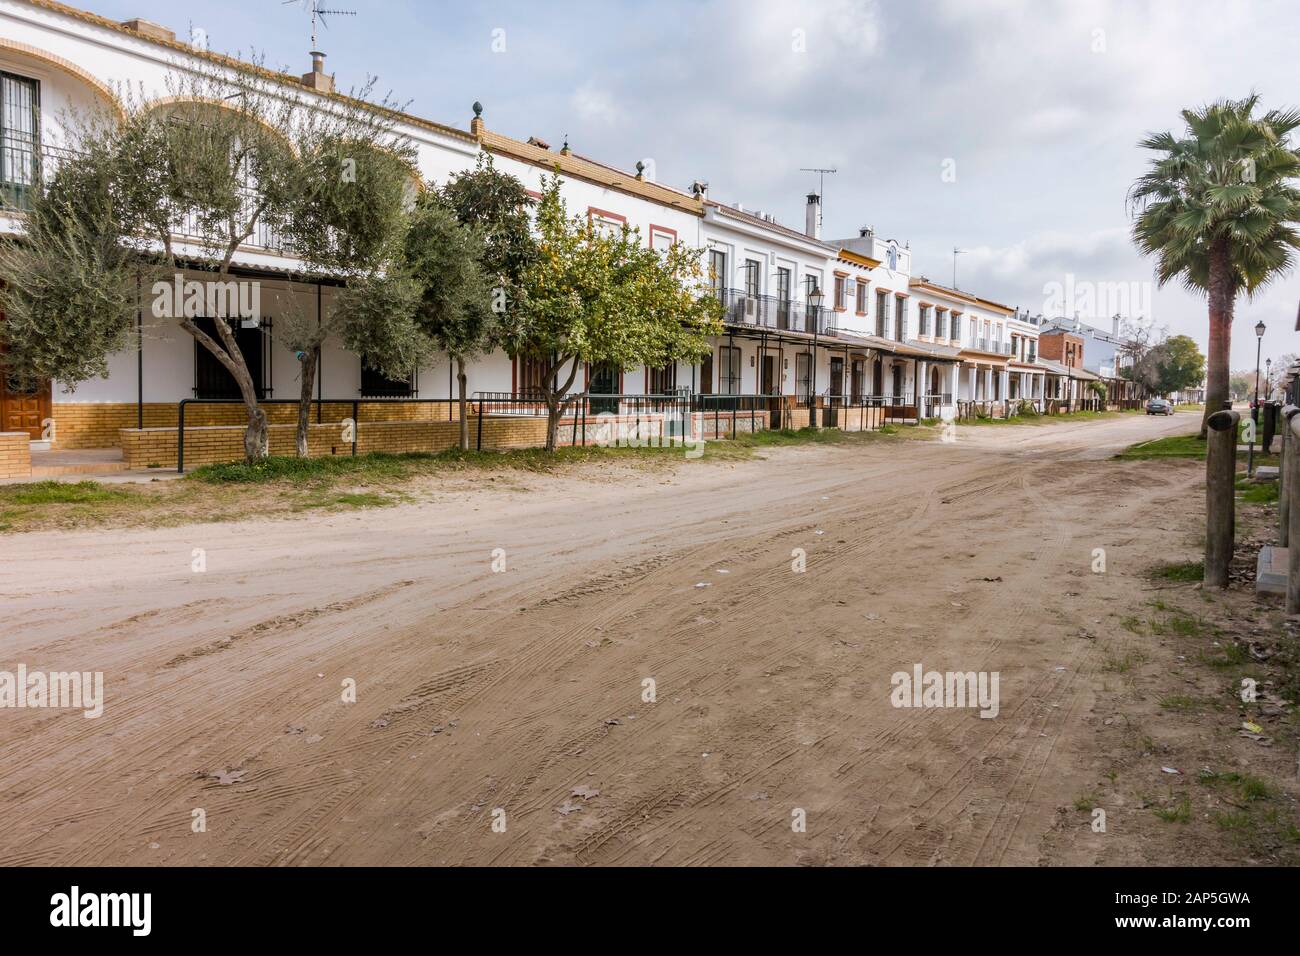 El Rocio Spain. Sandy streets and brotherhood housing in western style village. El Rocio, Huelva Province, Andalucia, Spain, Europe Stock Photo